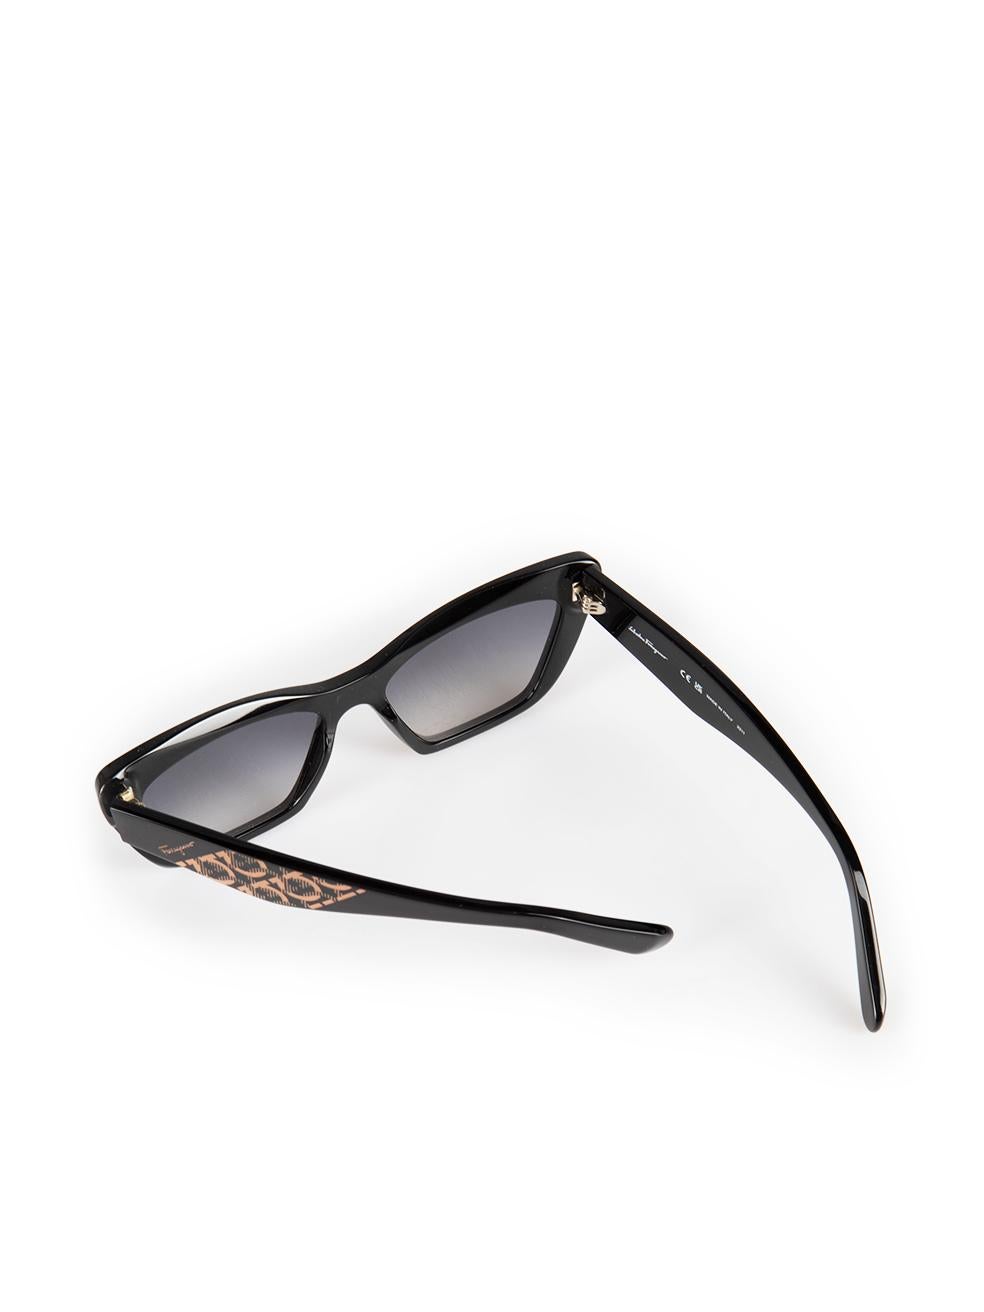 Salvatore Ferragamo Black Cat Eye Gradient Sunglasses For Sale 3